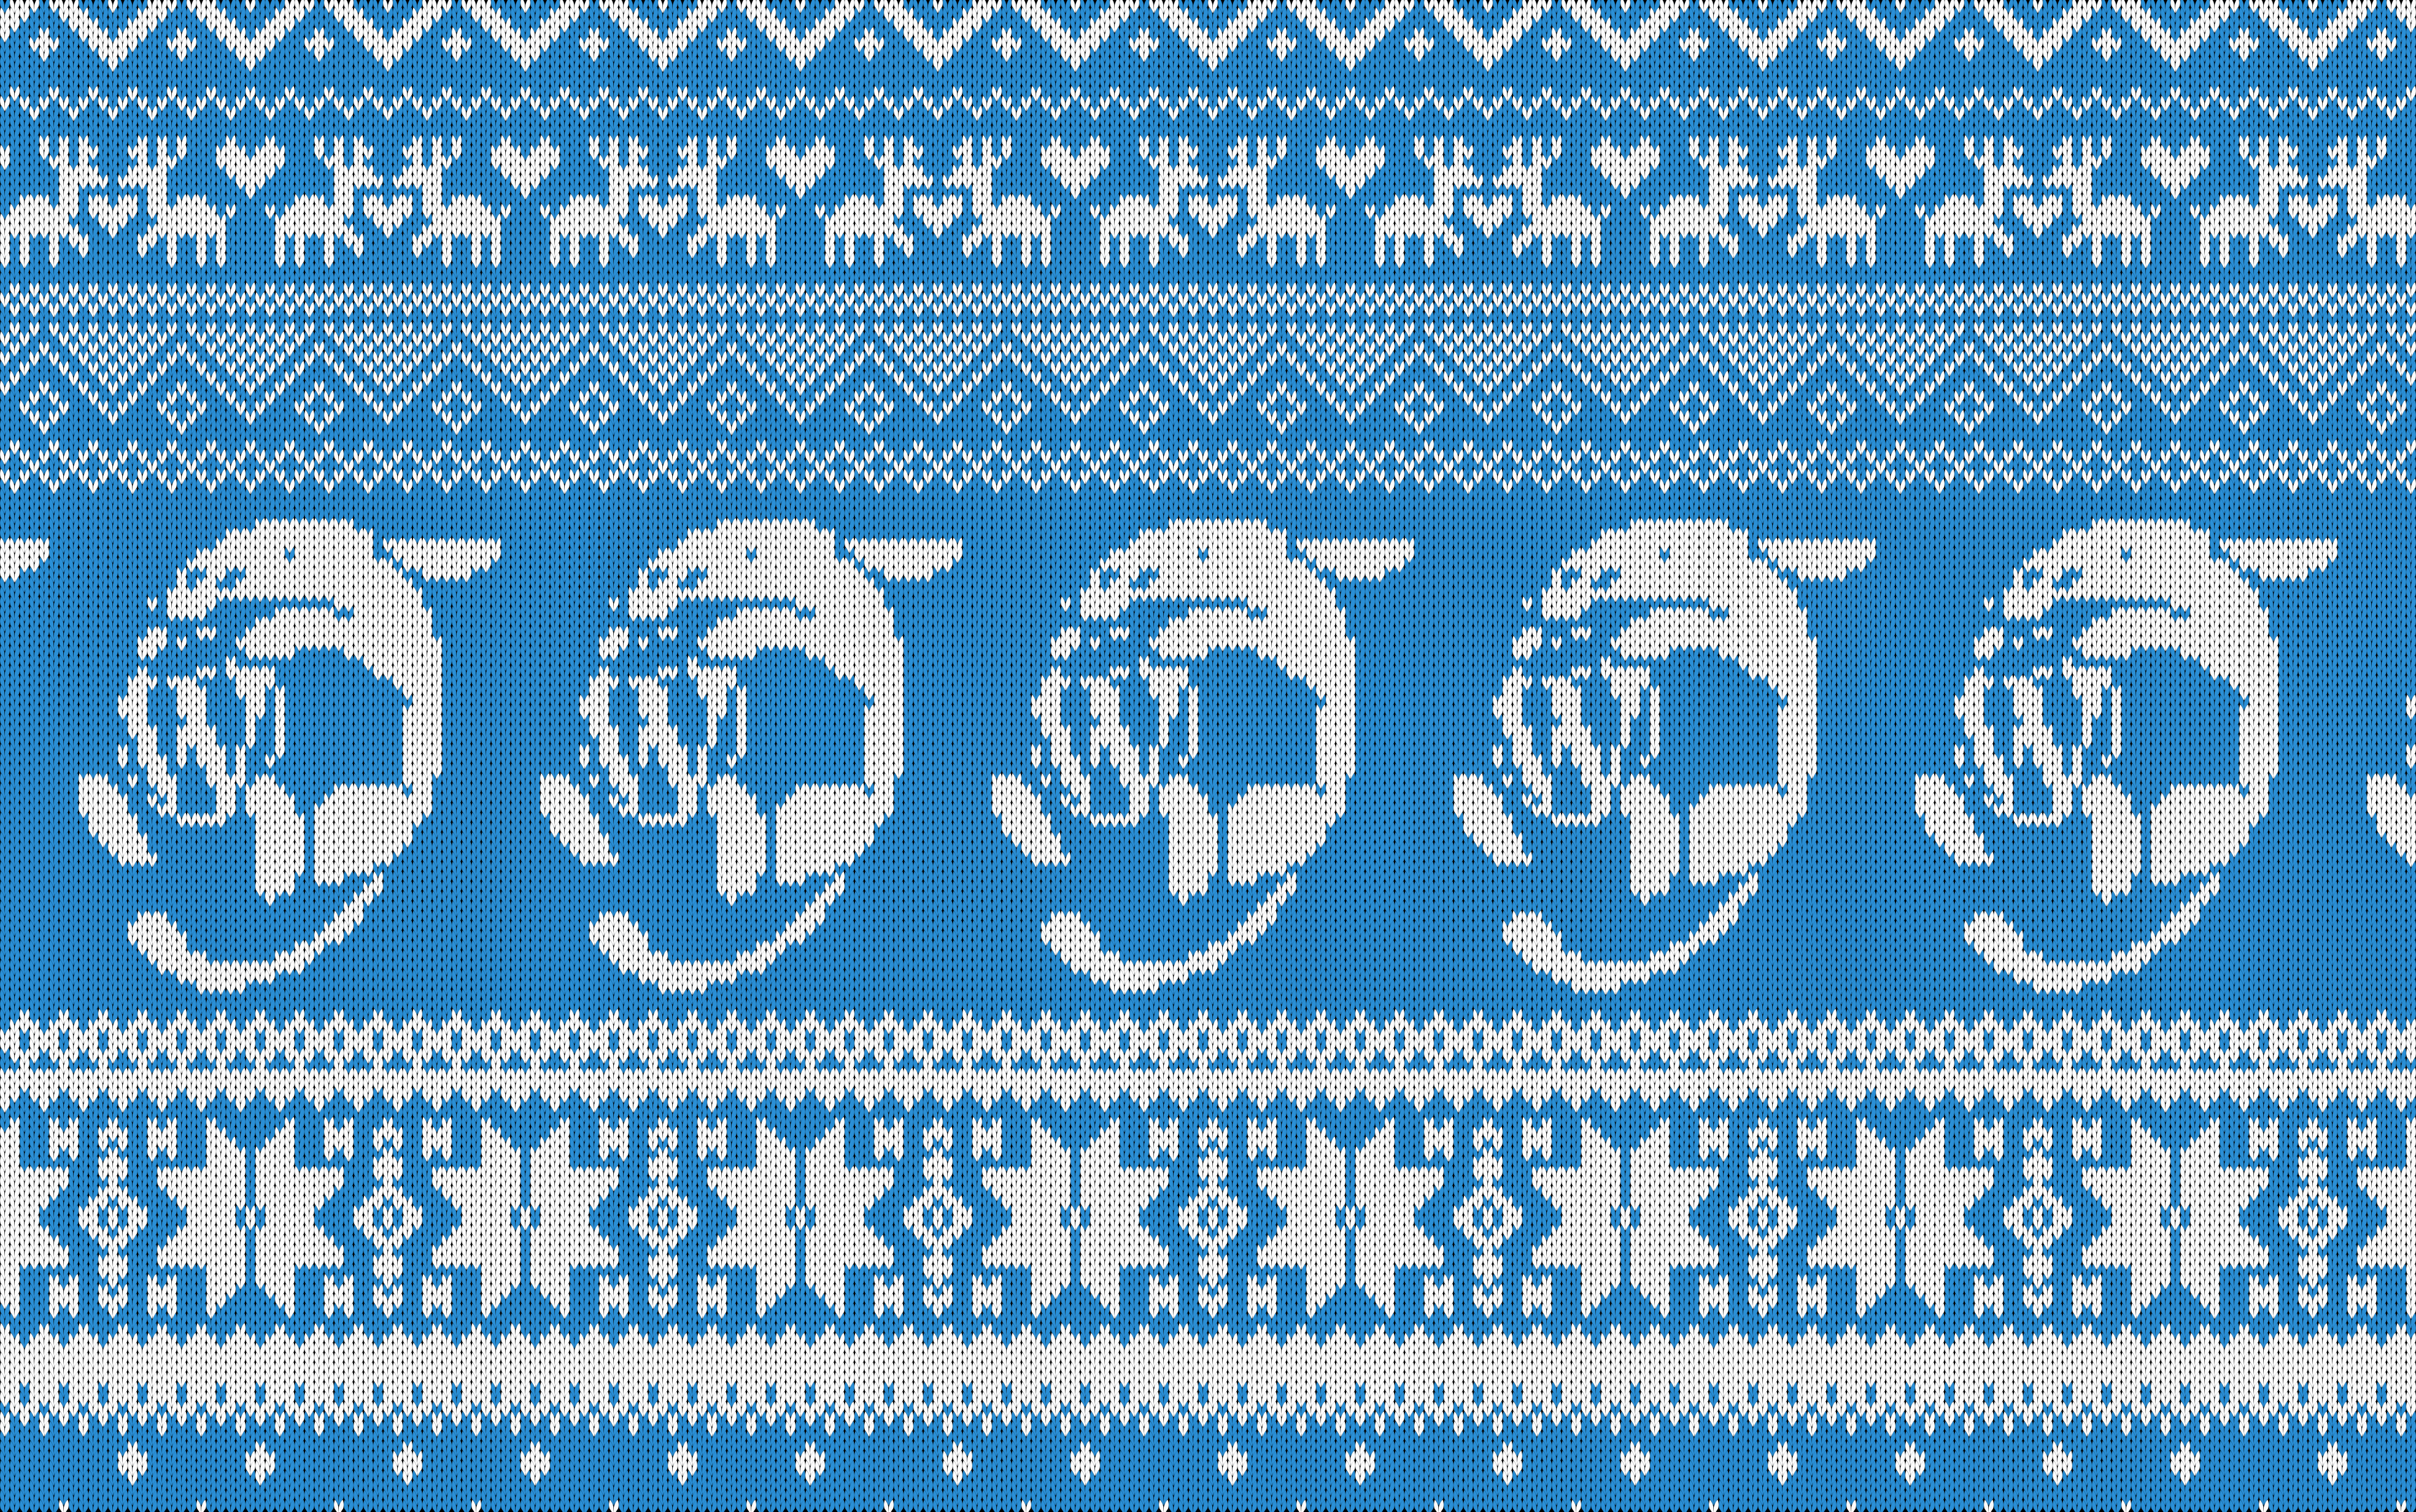 WordPress Ugly Christmas Sweater Wallpaper. @TwisterMc